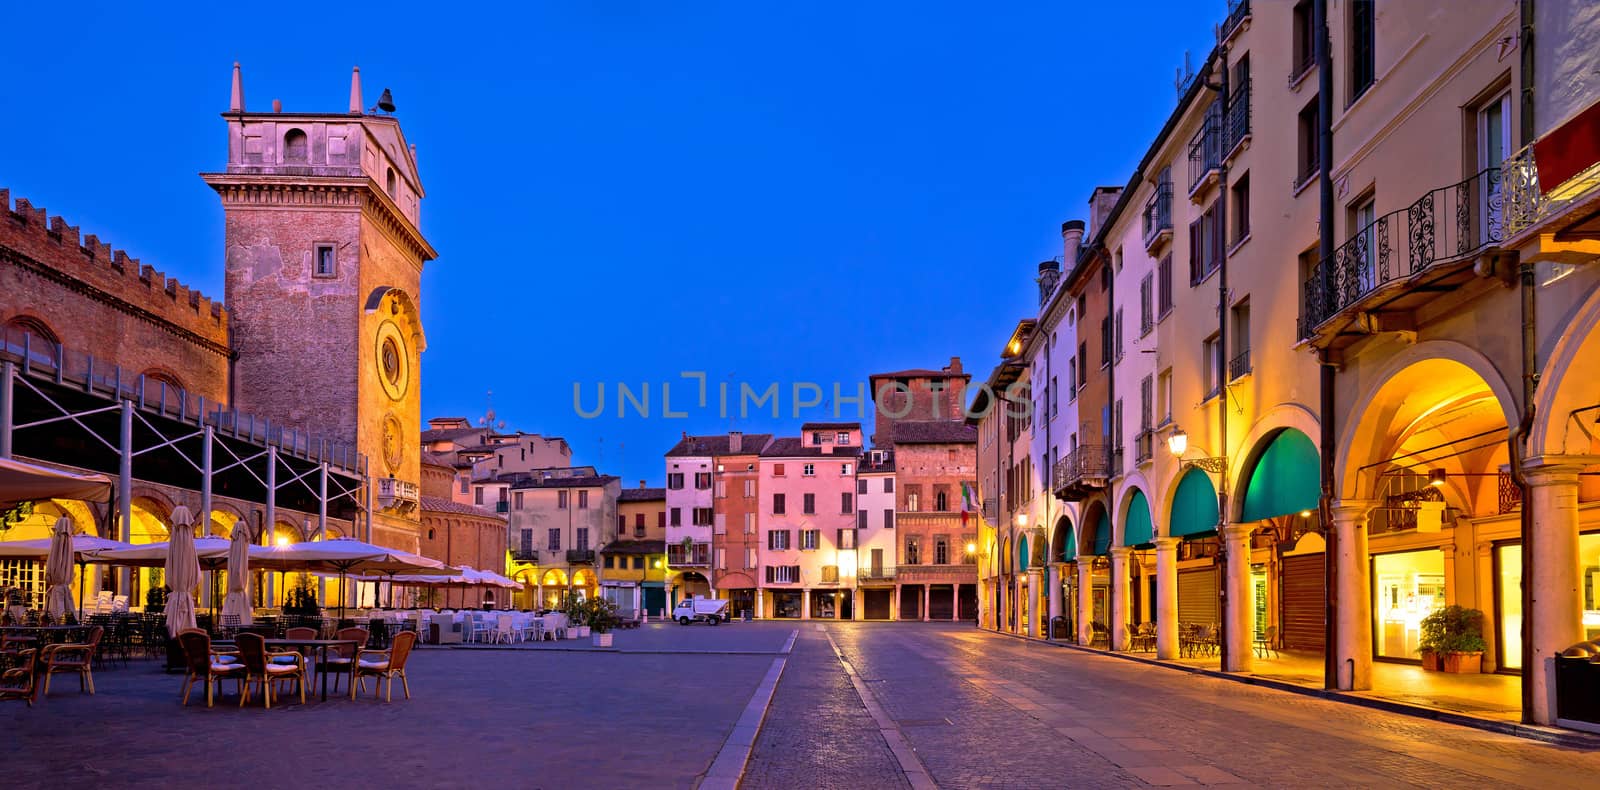 Mantova city Piazza delle Erbe evening view panorama by xbrchx